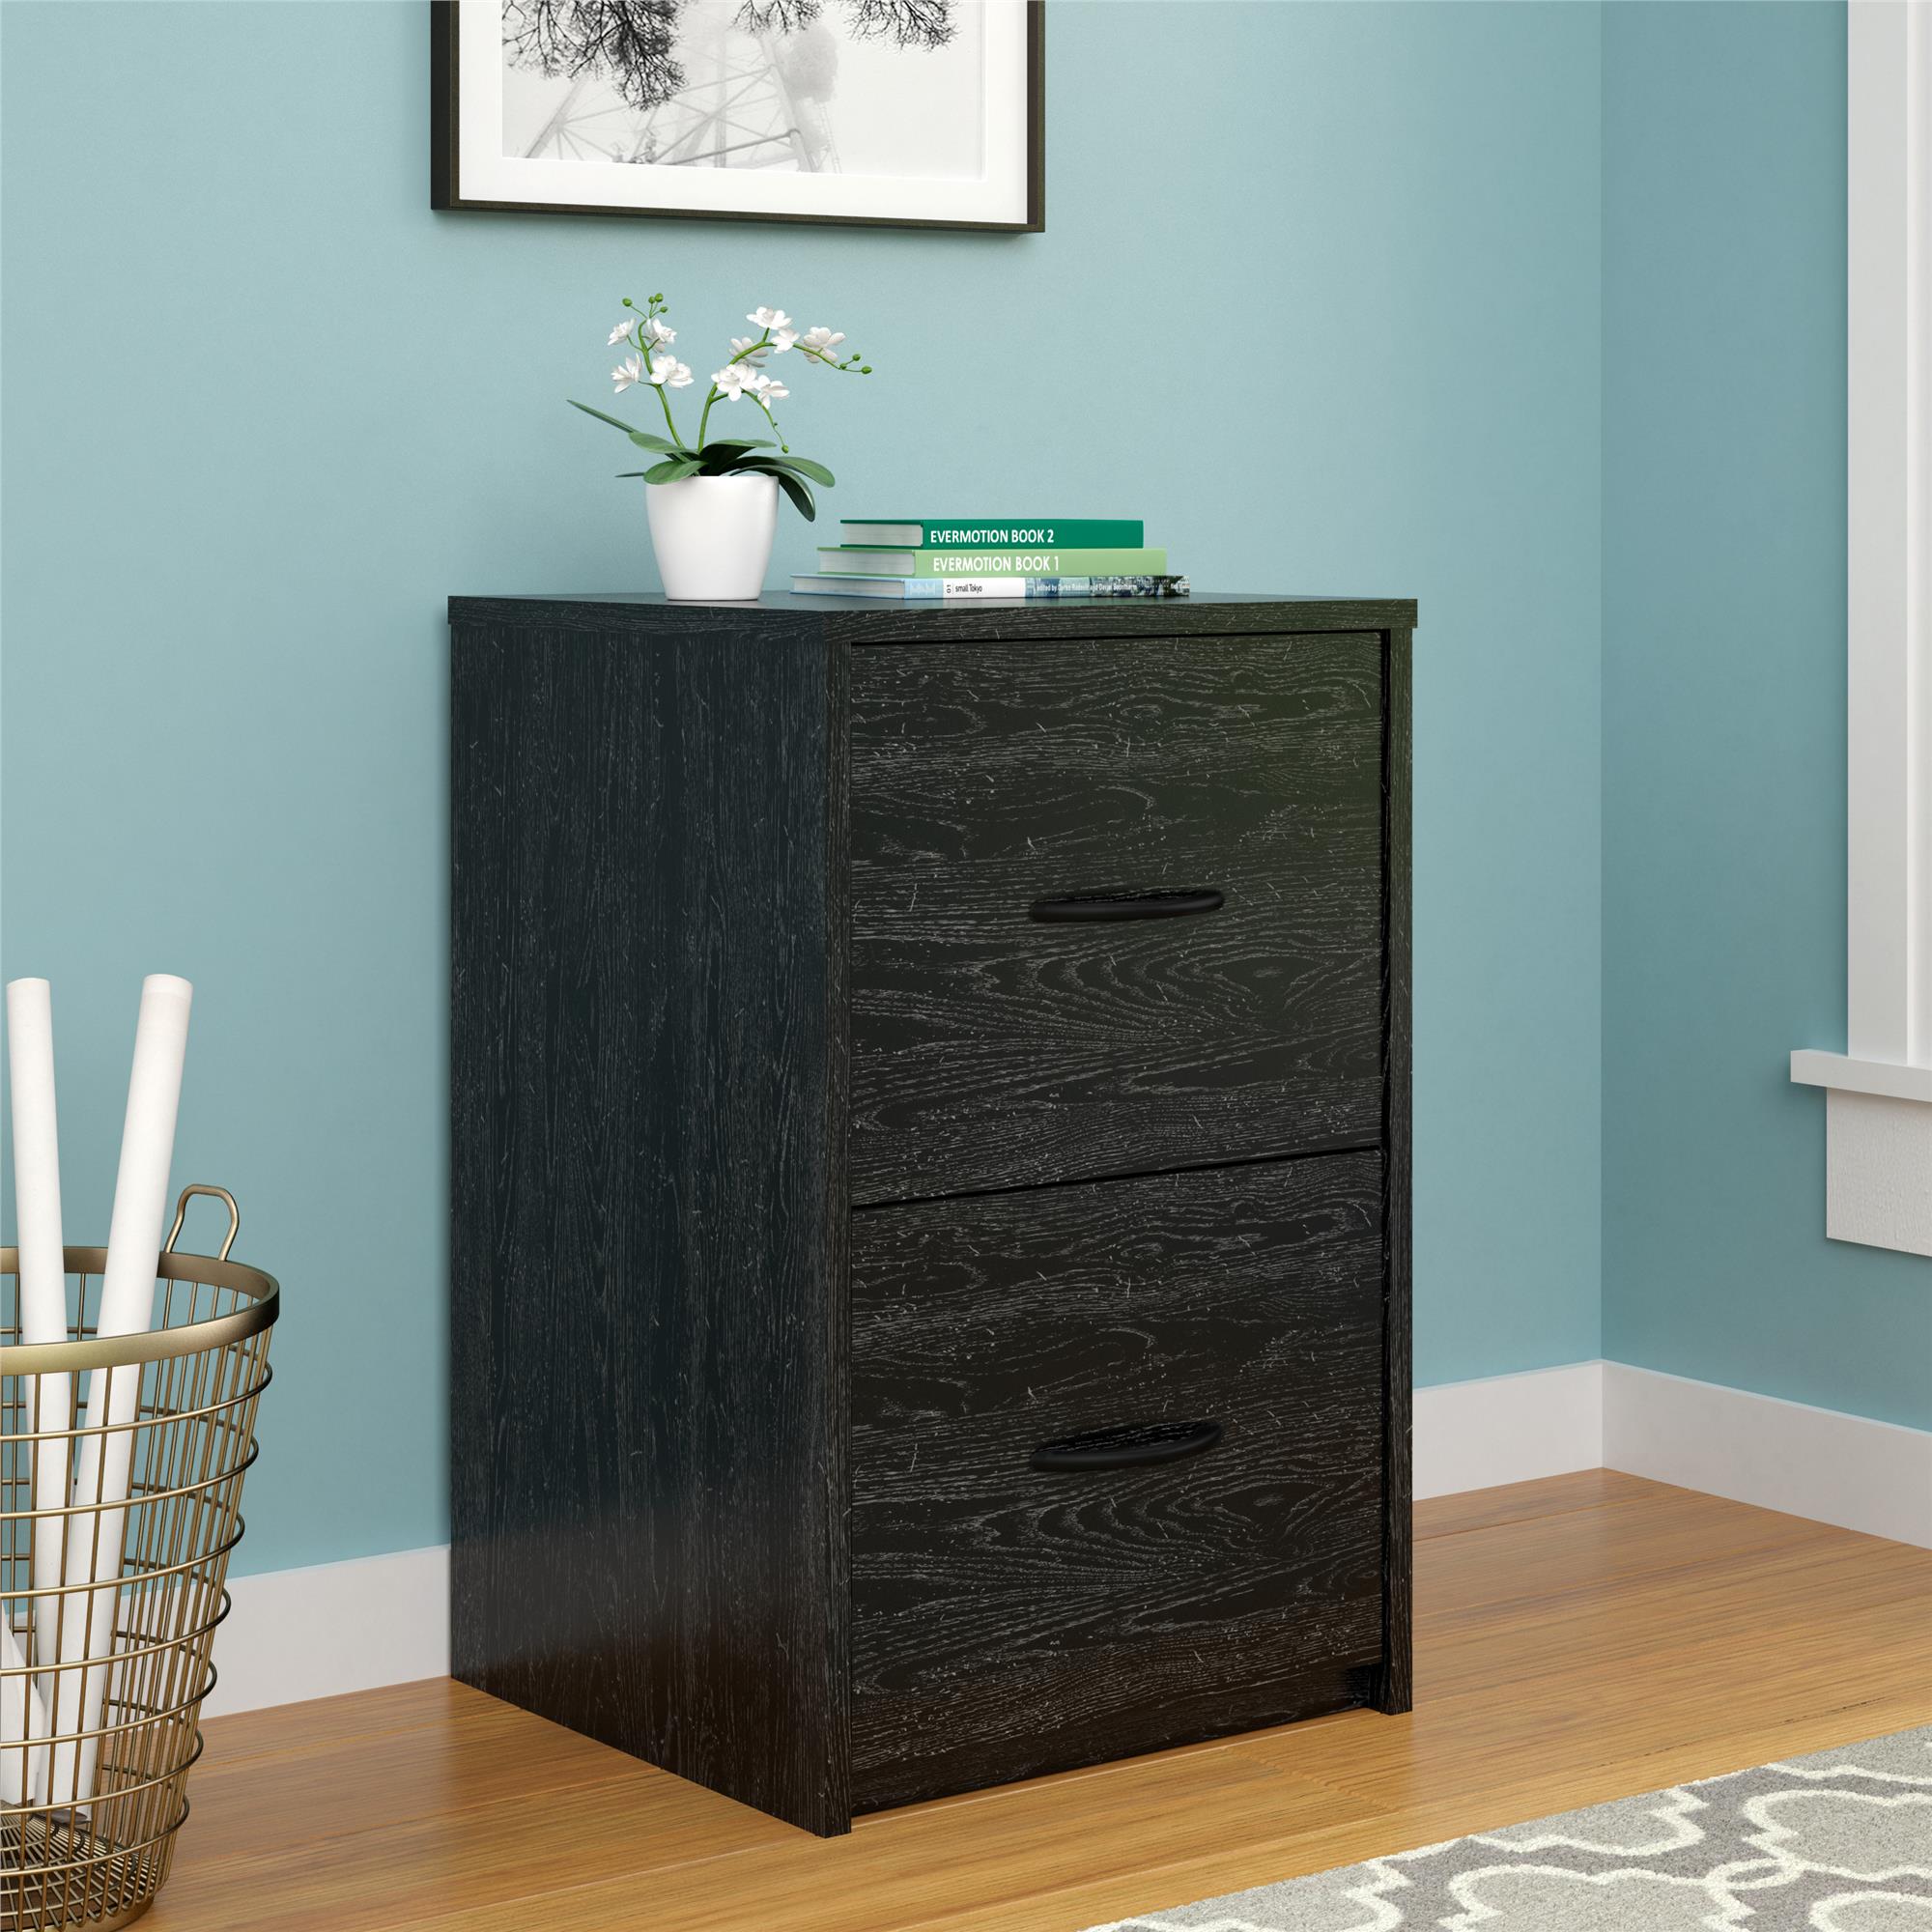 Ameriwood Home Core 2 Drawer File Cabinet, Black Oak - image 1 of 6